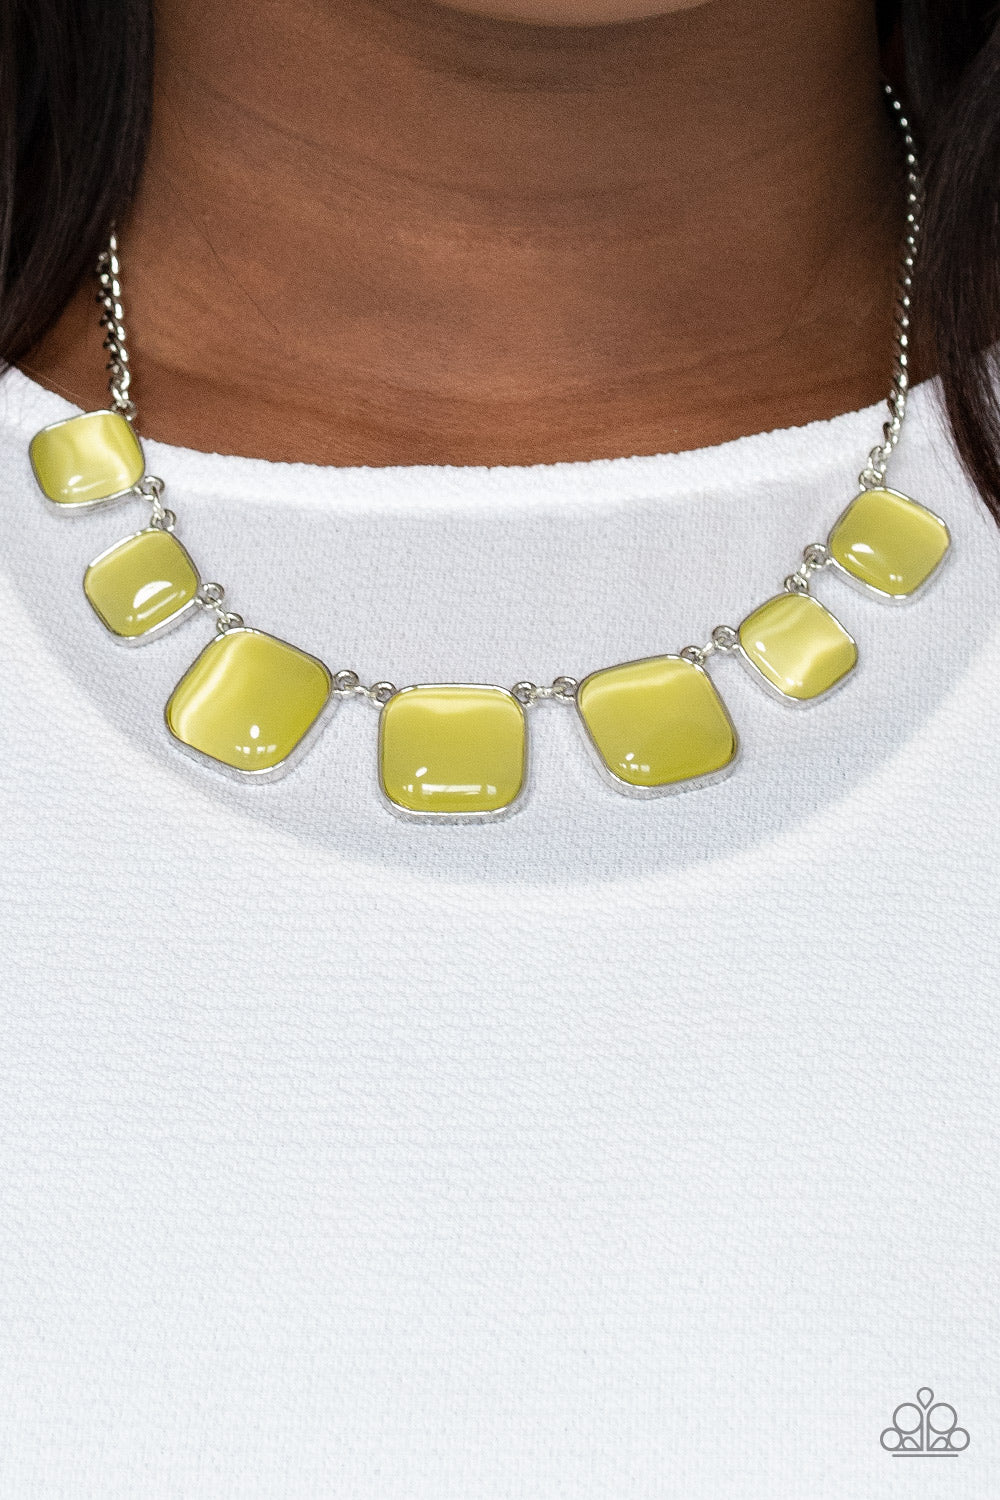 Aura Allure - Yellow moonstone necklace